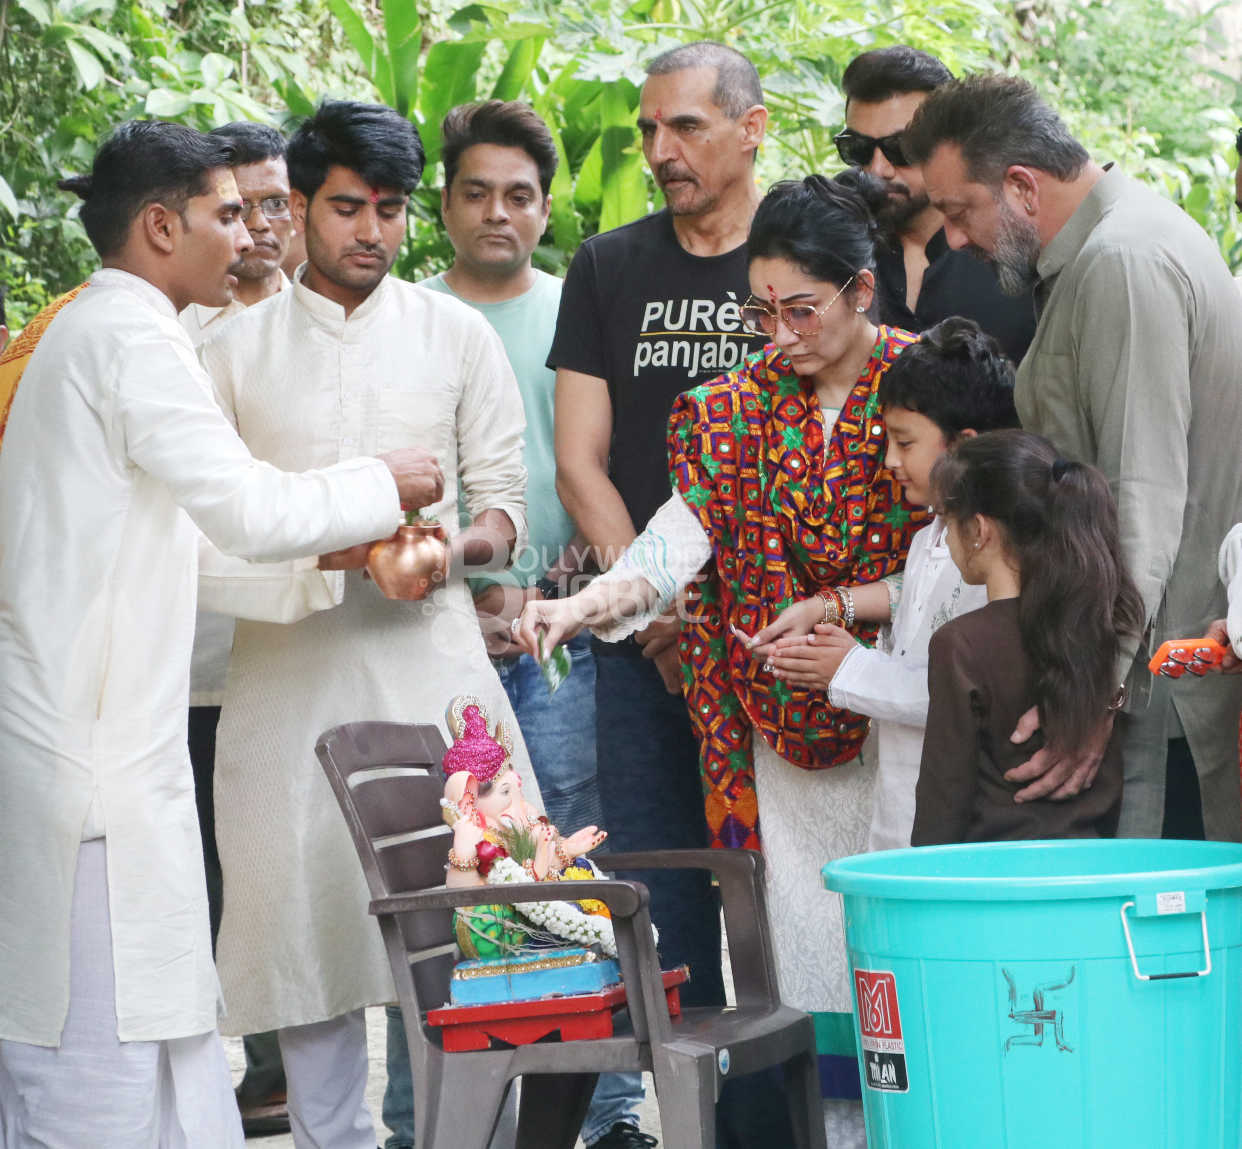 sanjay dutt maanayata dutta celebrates eco friendly ganpati visarjan 2018